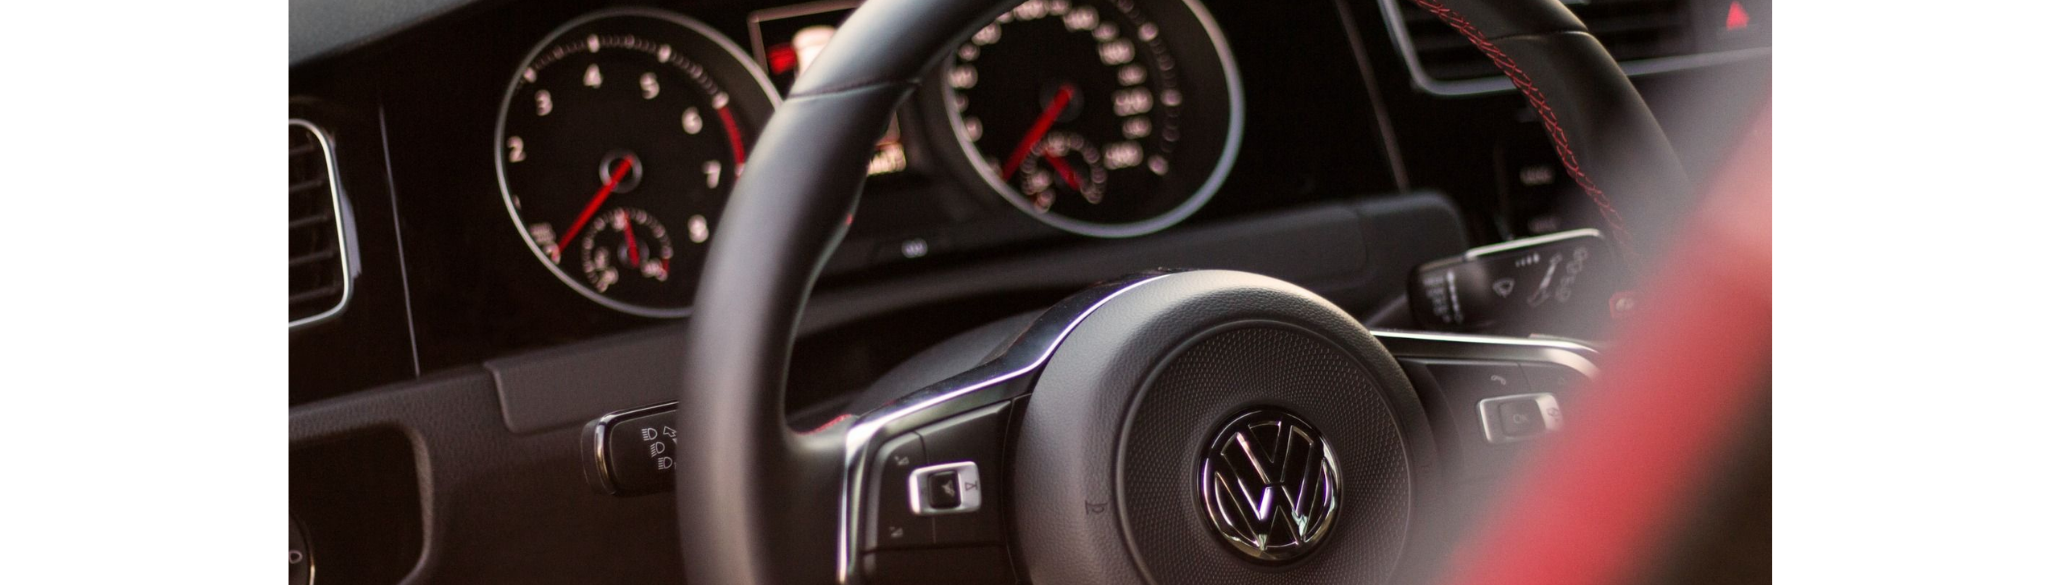 Volkswagen Golf interior from driver window